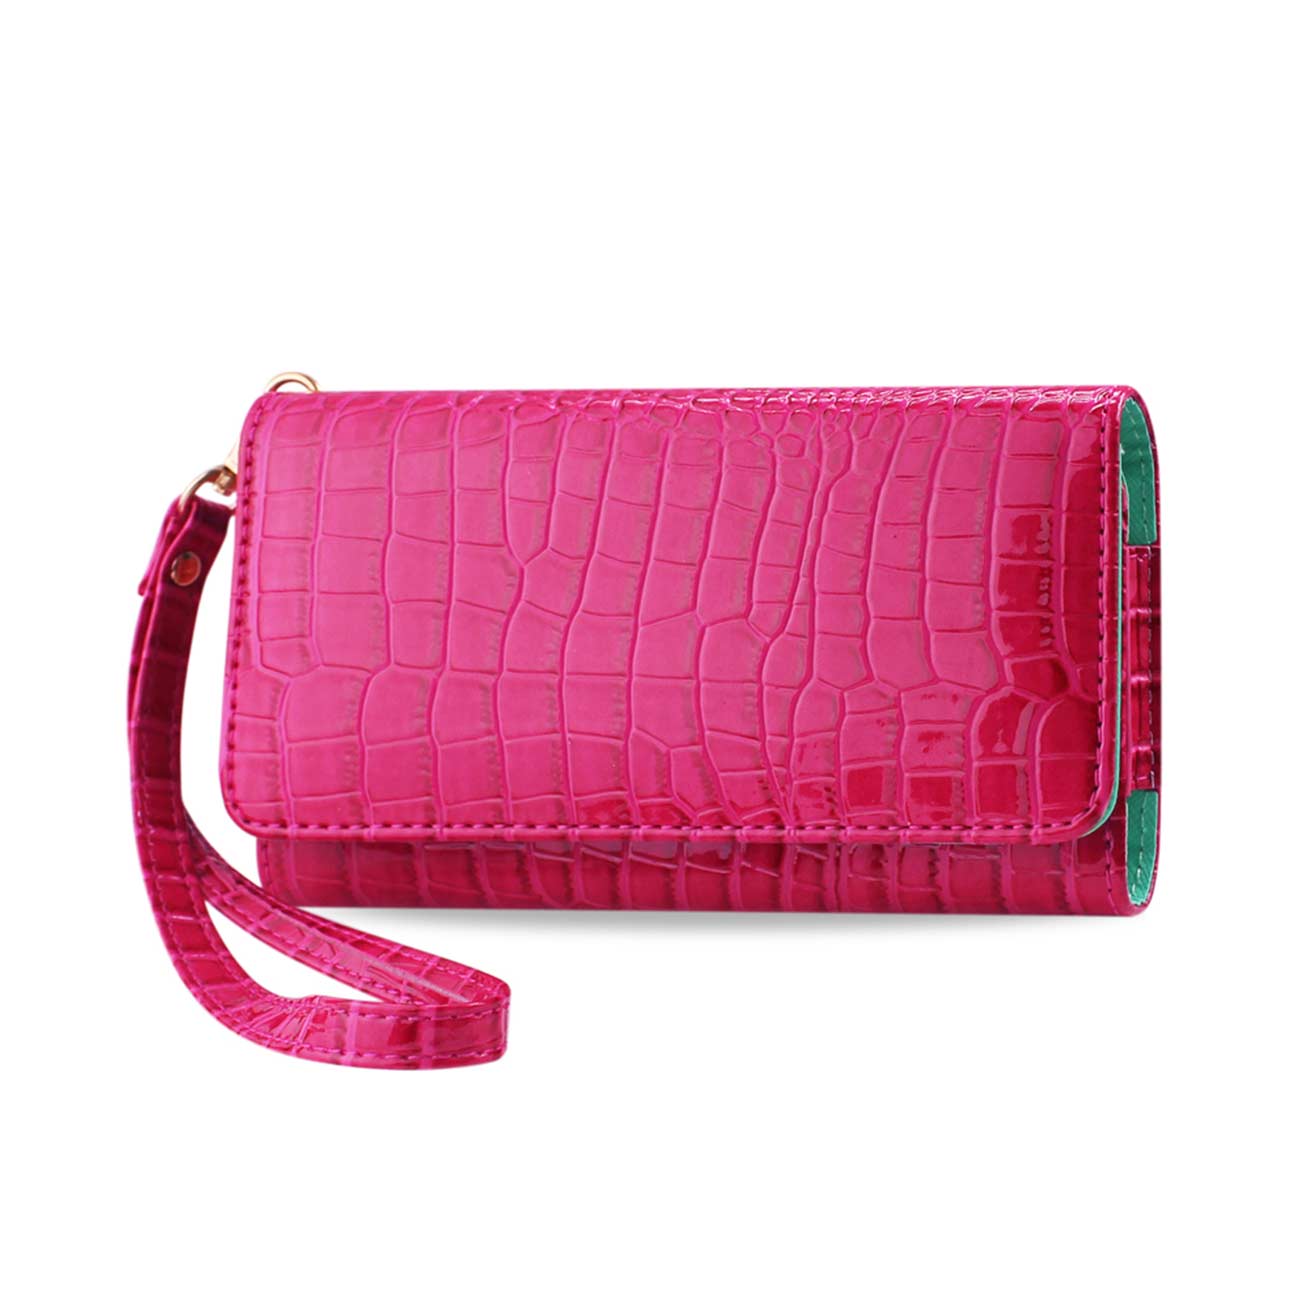 Purse Wallet Case Crocodile Pattern Hot Pink Color